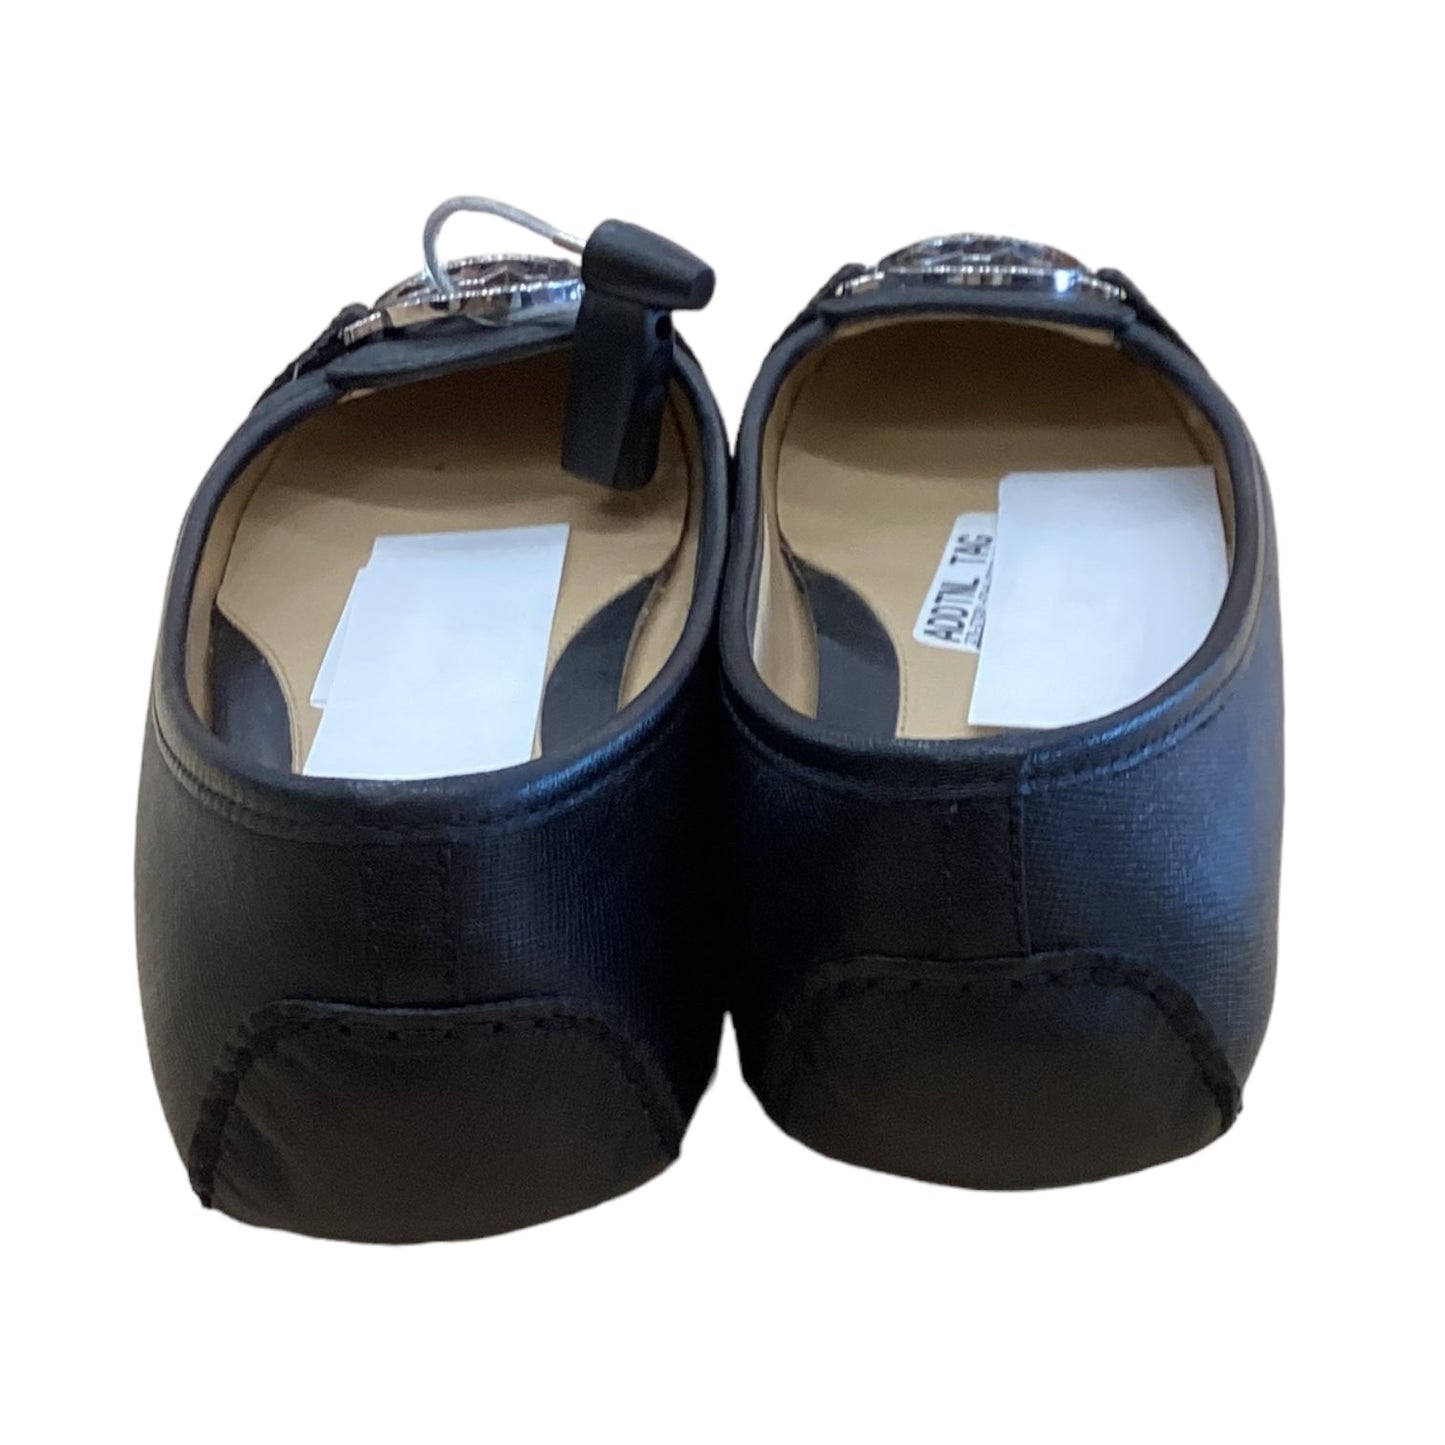 Black Shoes Flats Michael Kors, Size 7.5